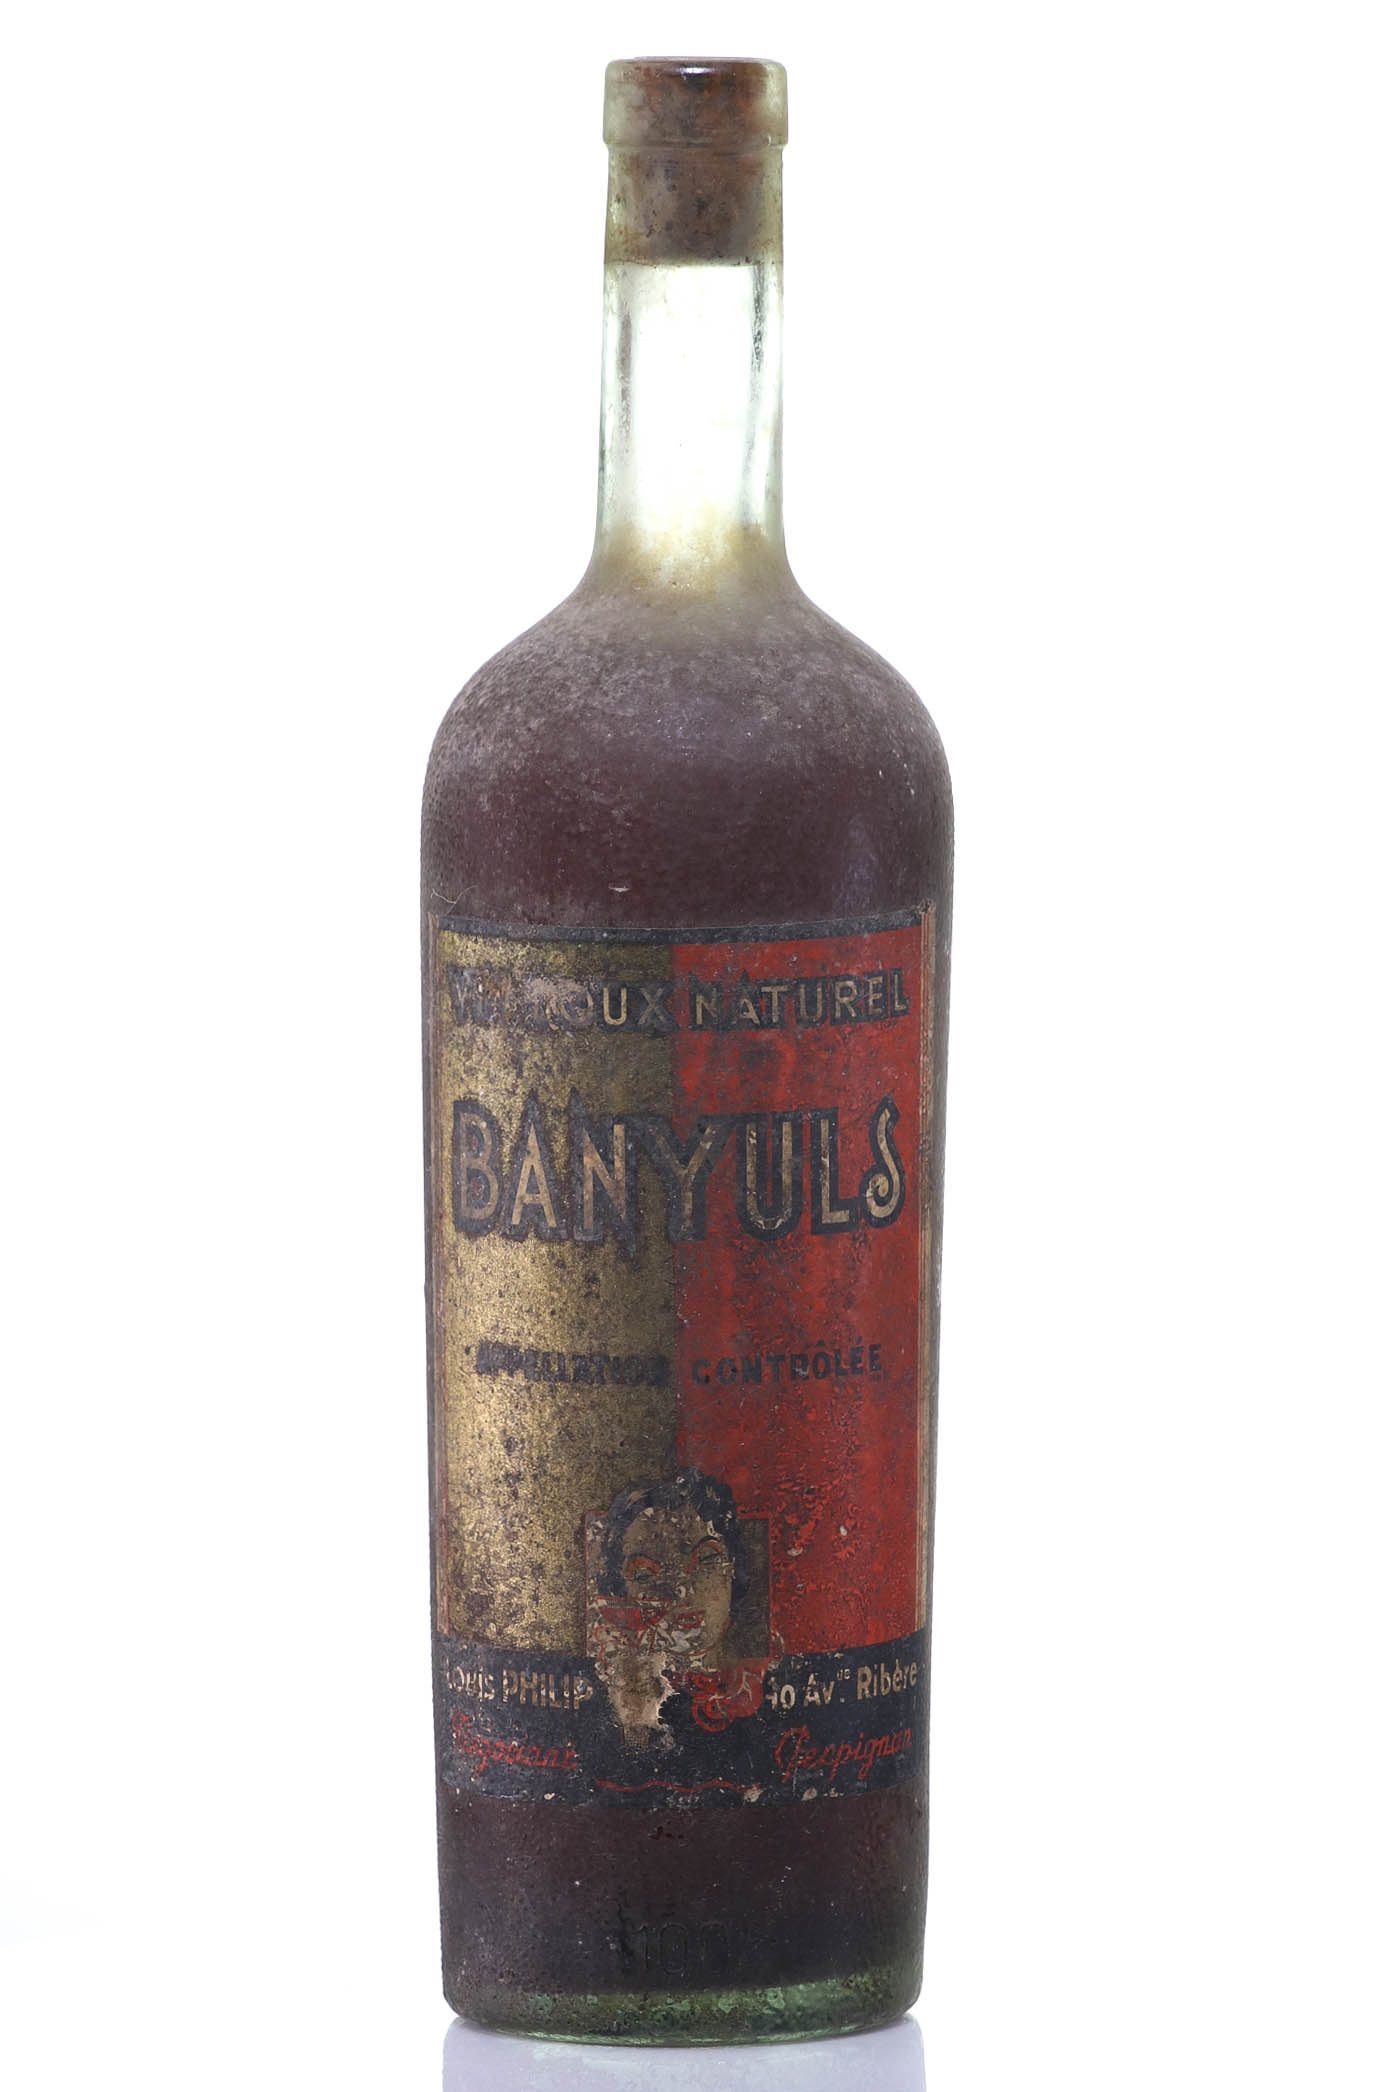 Banyuls Louis Philip - Old Liquors